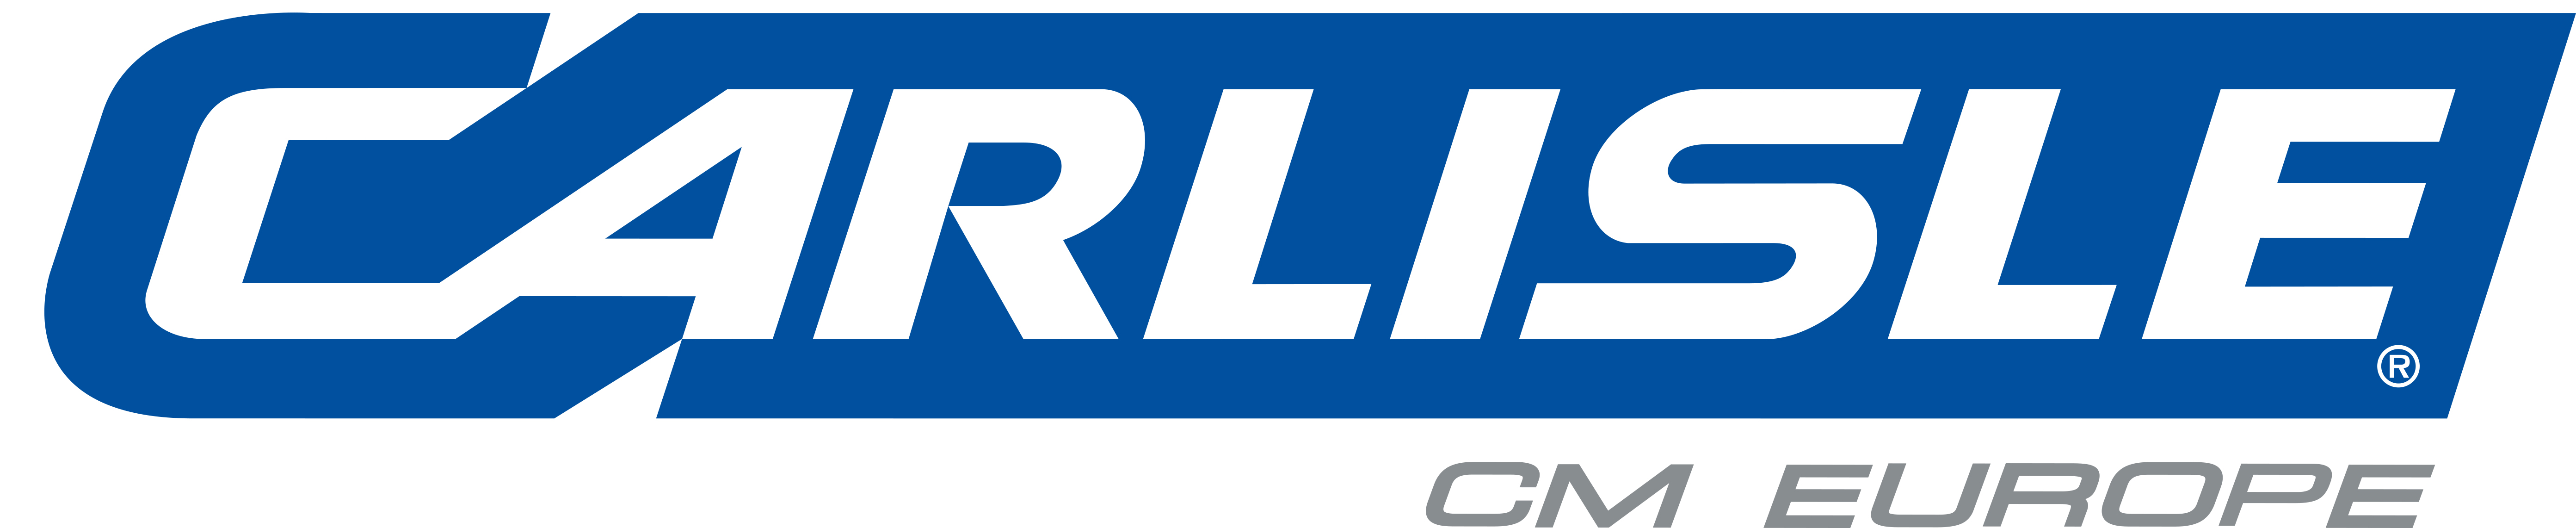 CCM Europe Logo.jpg